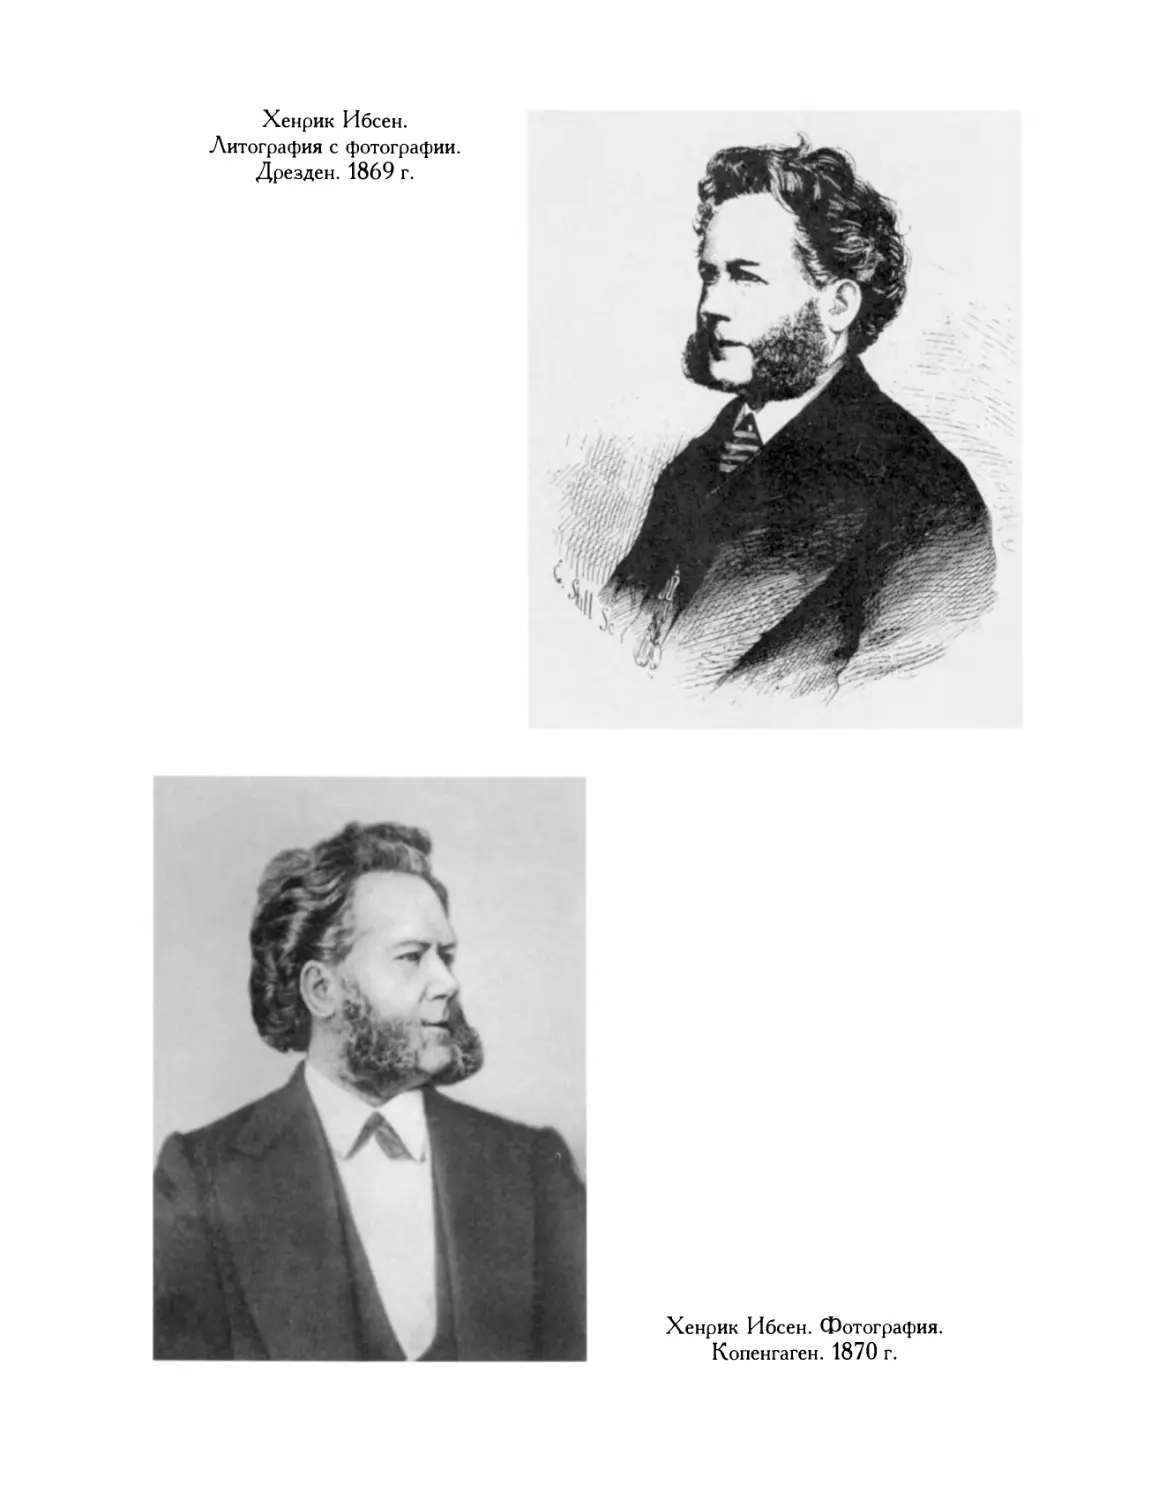 Хенрик Ибсен. Литография с фотографии. Дрезден. 1869 г.; Хенрик Ибсен. Фотография. Копенгаген. 1870 г.